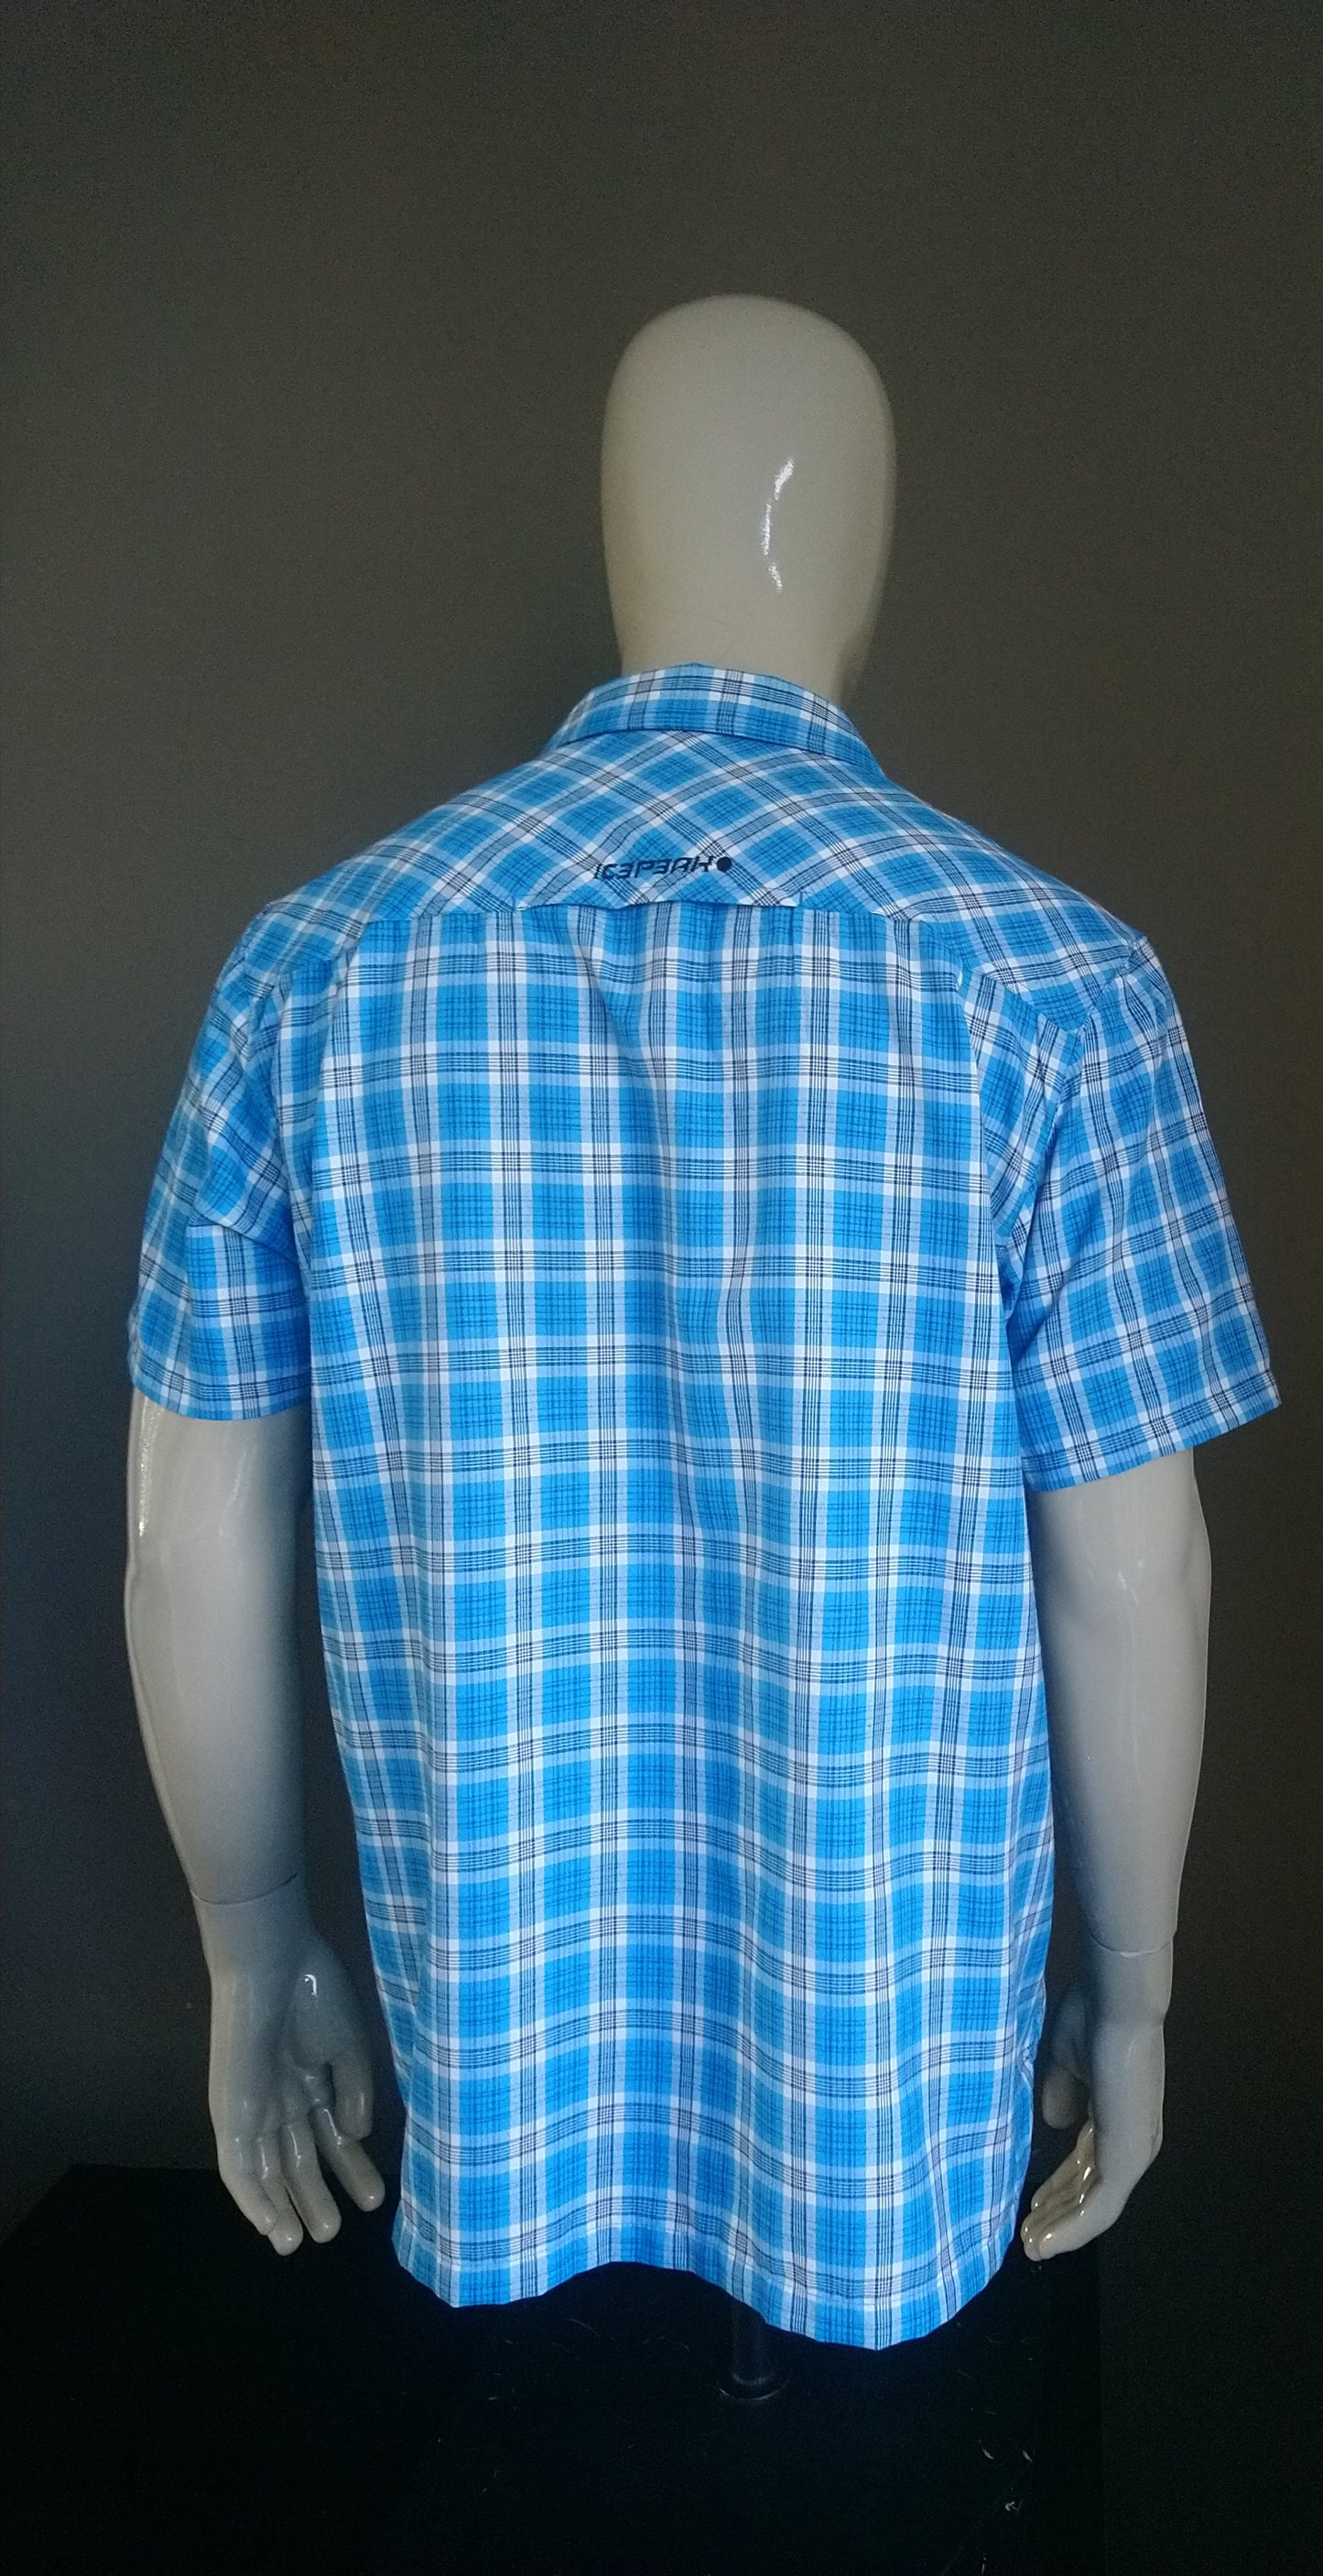 Shirt Icepeak manica corta. Verde bianco blu controllato. Taglia XL.